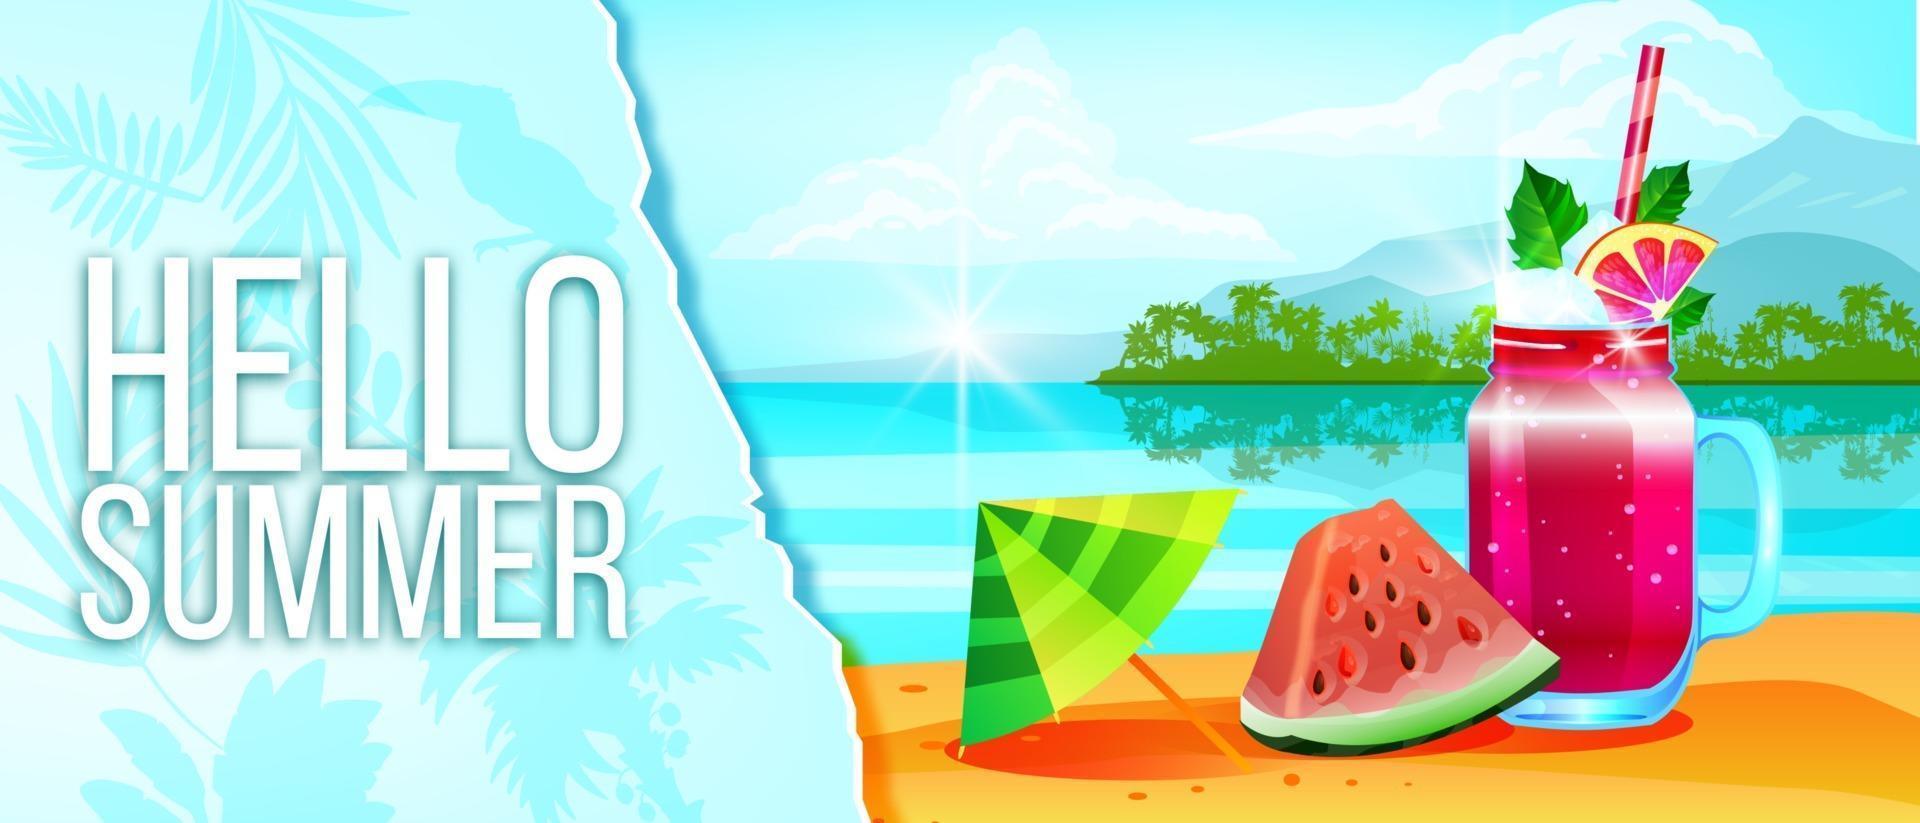 zomervakantie banner, seizoen verkoop achtergrond, koude drank, watermeloen, tropisch eiland strand vector